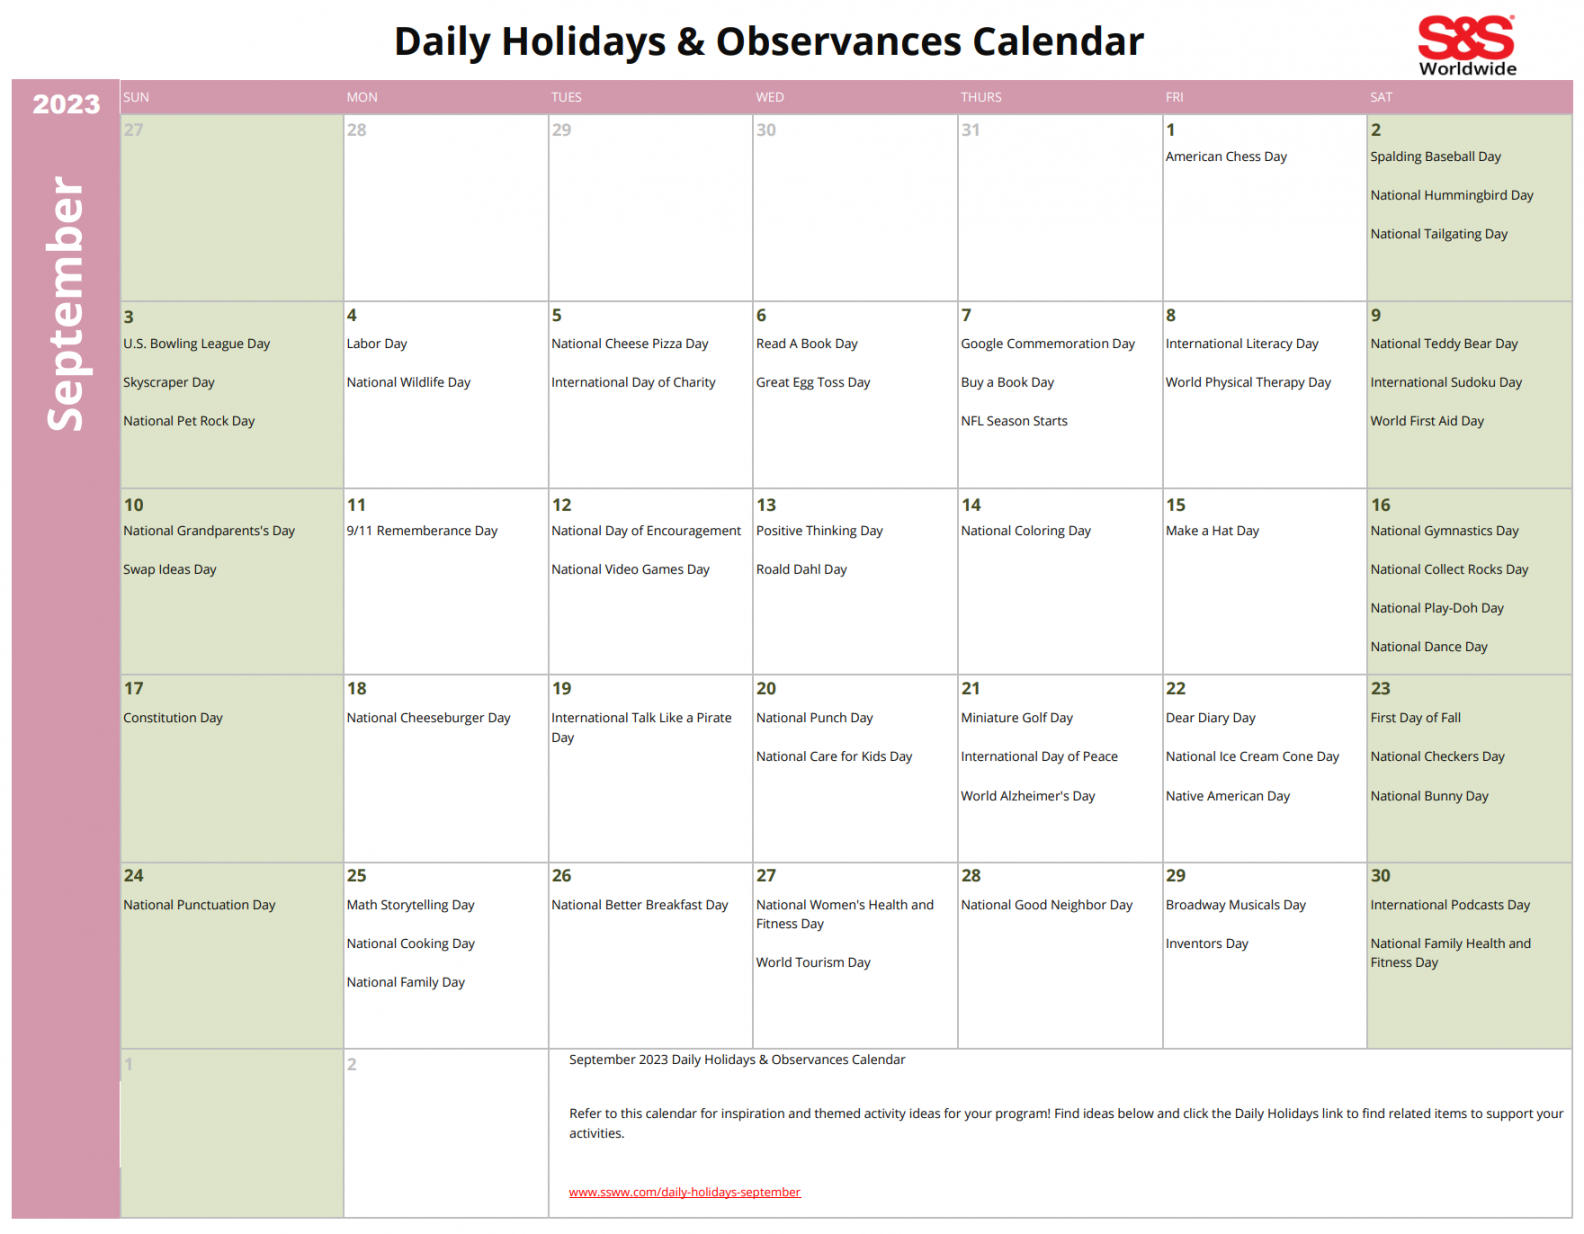 September Daily Holidays & Observances Printable Calendar - S&S Blog